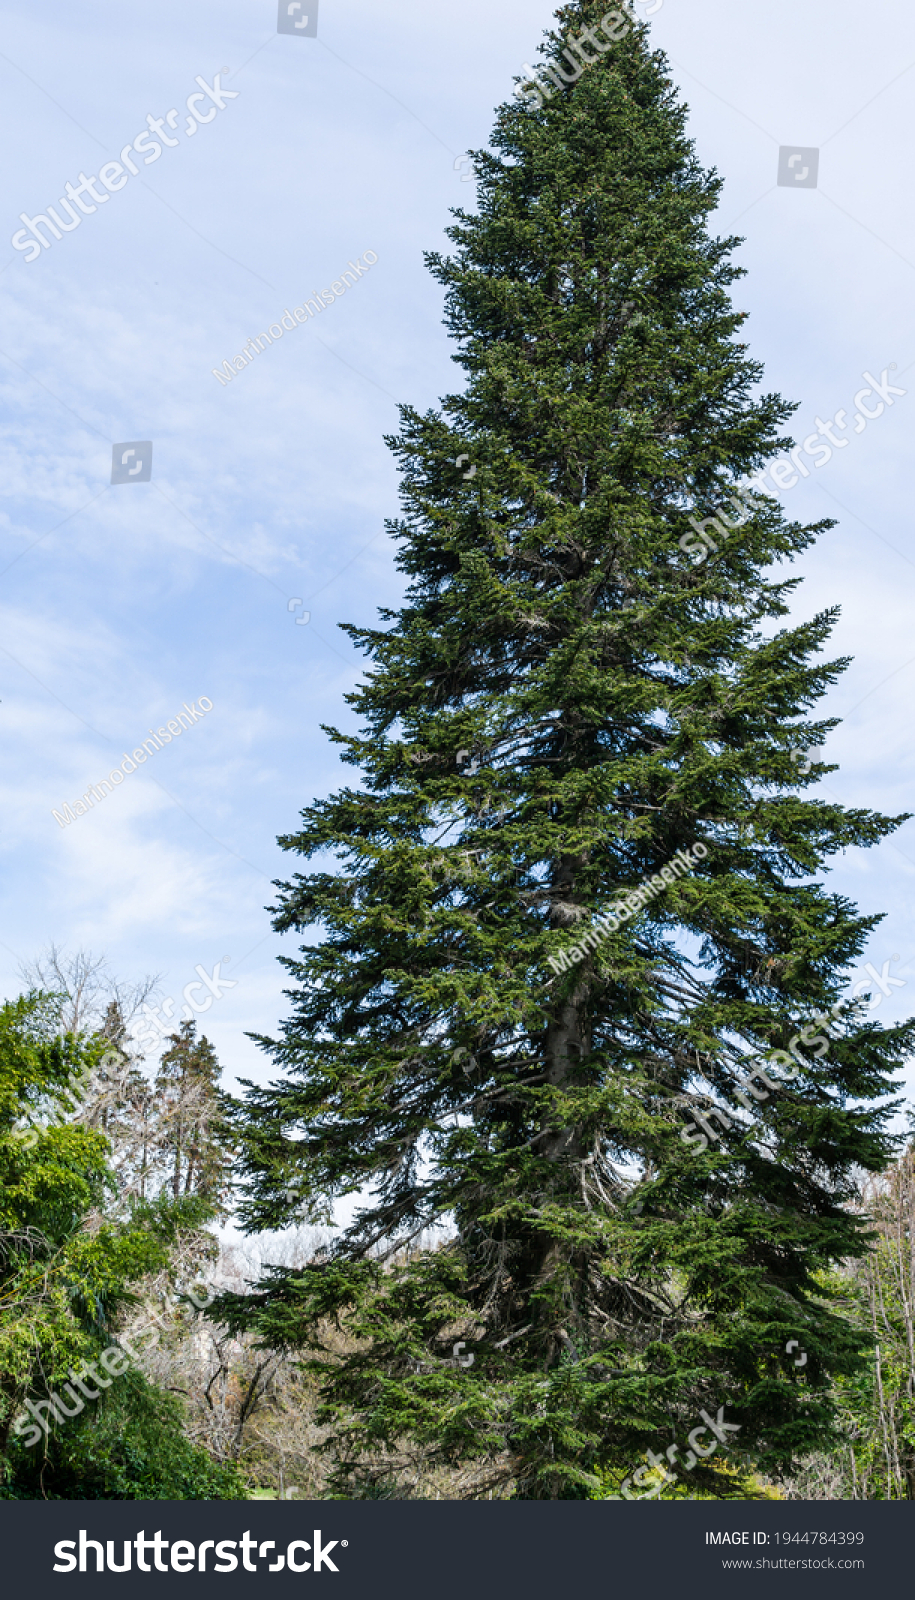 Big dark green coniferous tree fir Abies nordmanniana  (Caucasian Fir) or Christmas tree in Arboretum Park Southern Cultures in Sirius (Adler). #1944784399